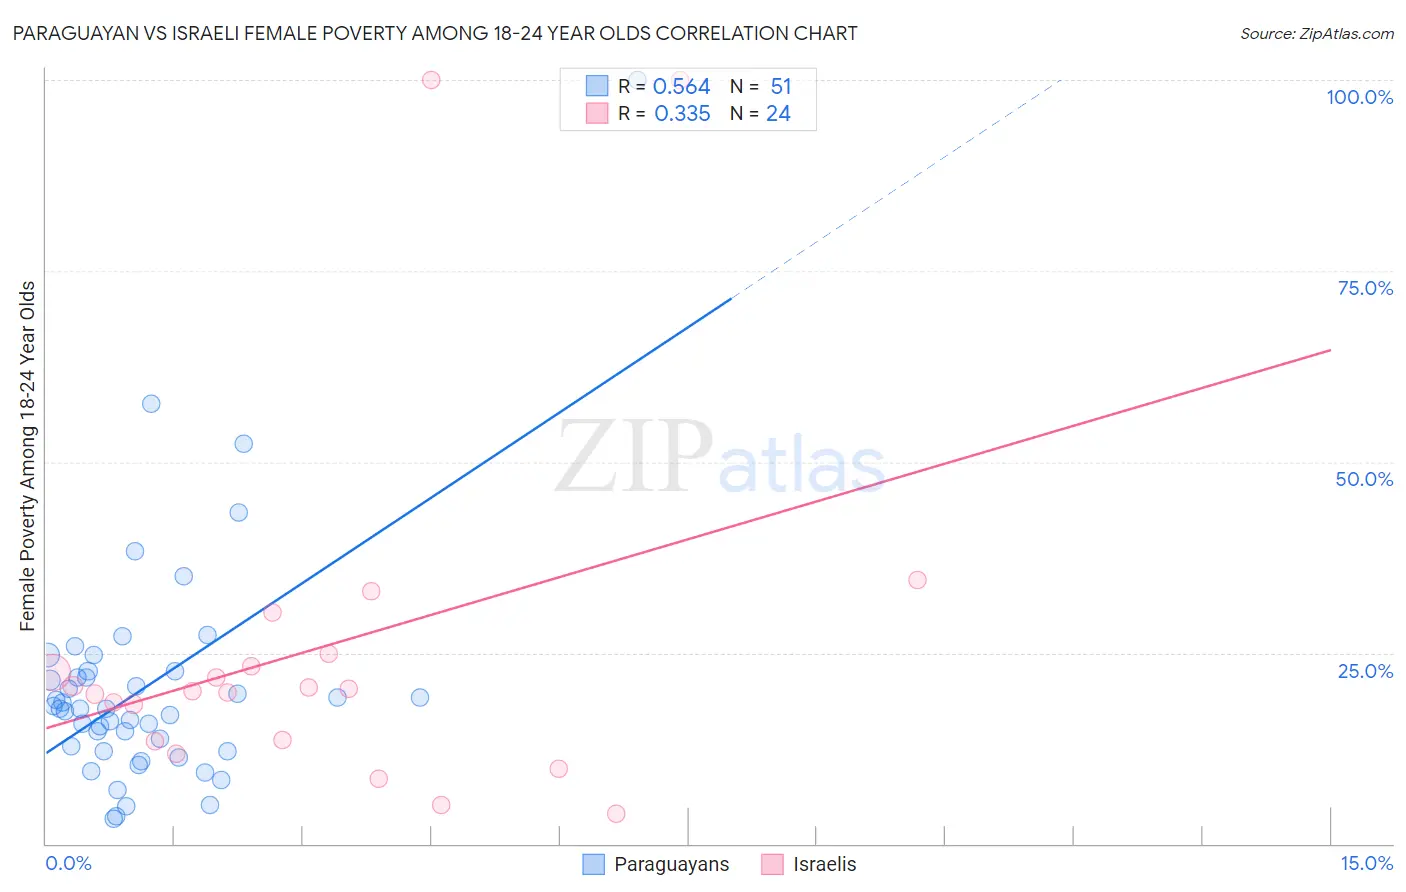 Paraguayan vs Israeli Female Poverty Among 18-24 Year Olds